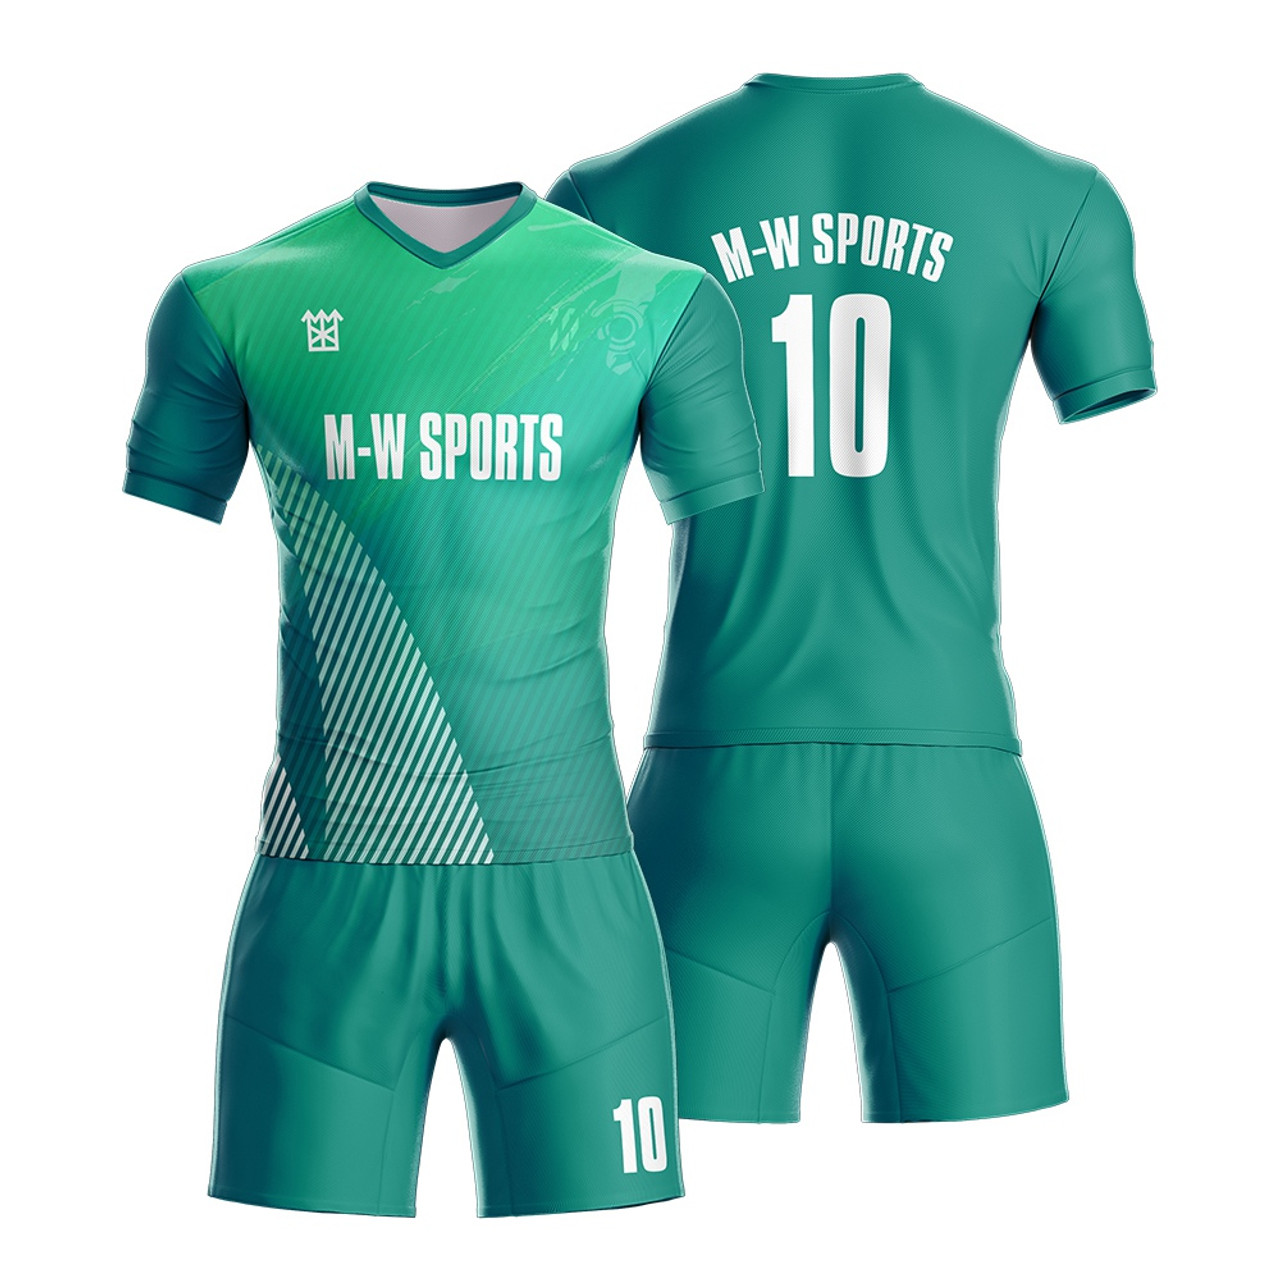 Football Shirt 22/23 Customized 100%Polyester Soccer Uniform Green